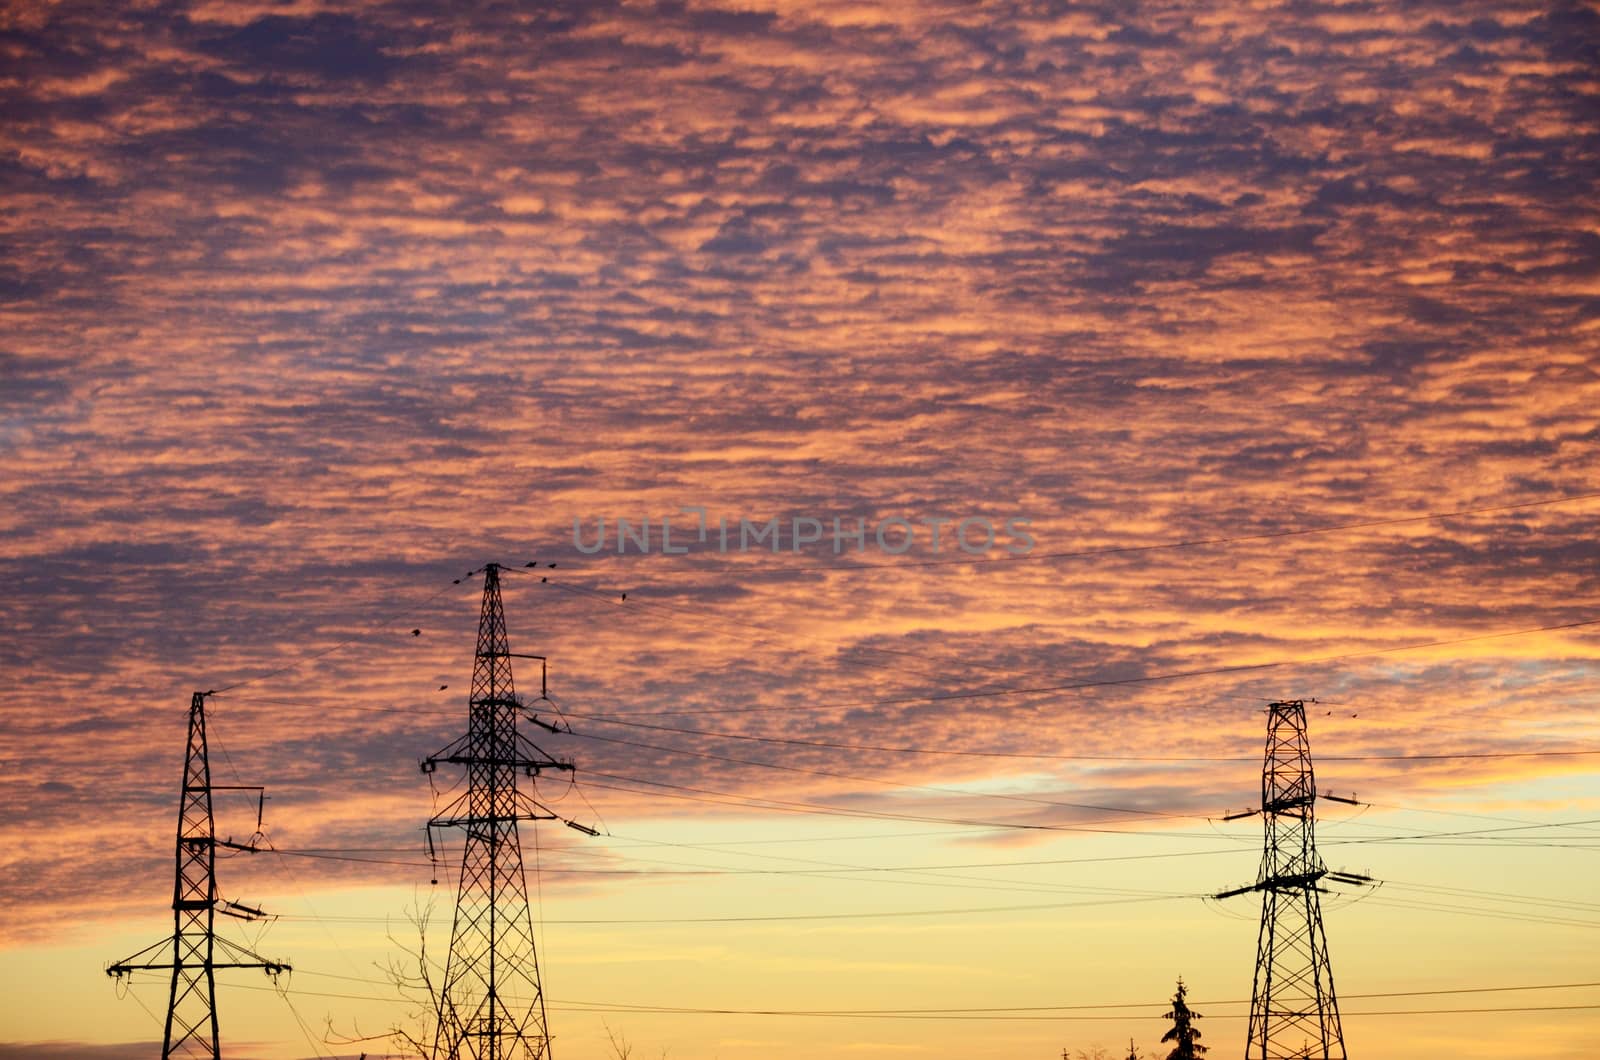 Sky with electric poles by bartekchiny